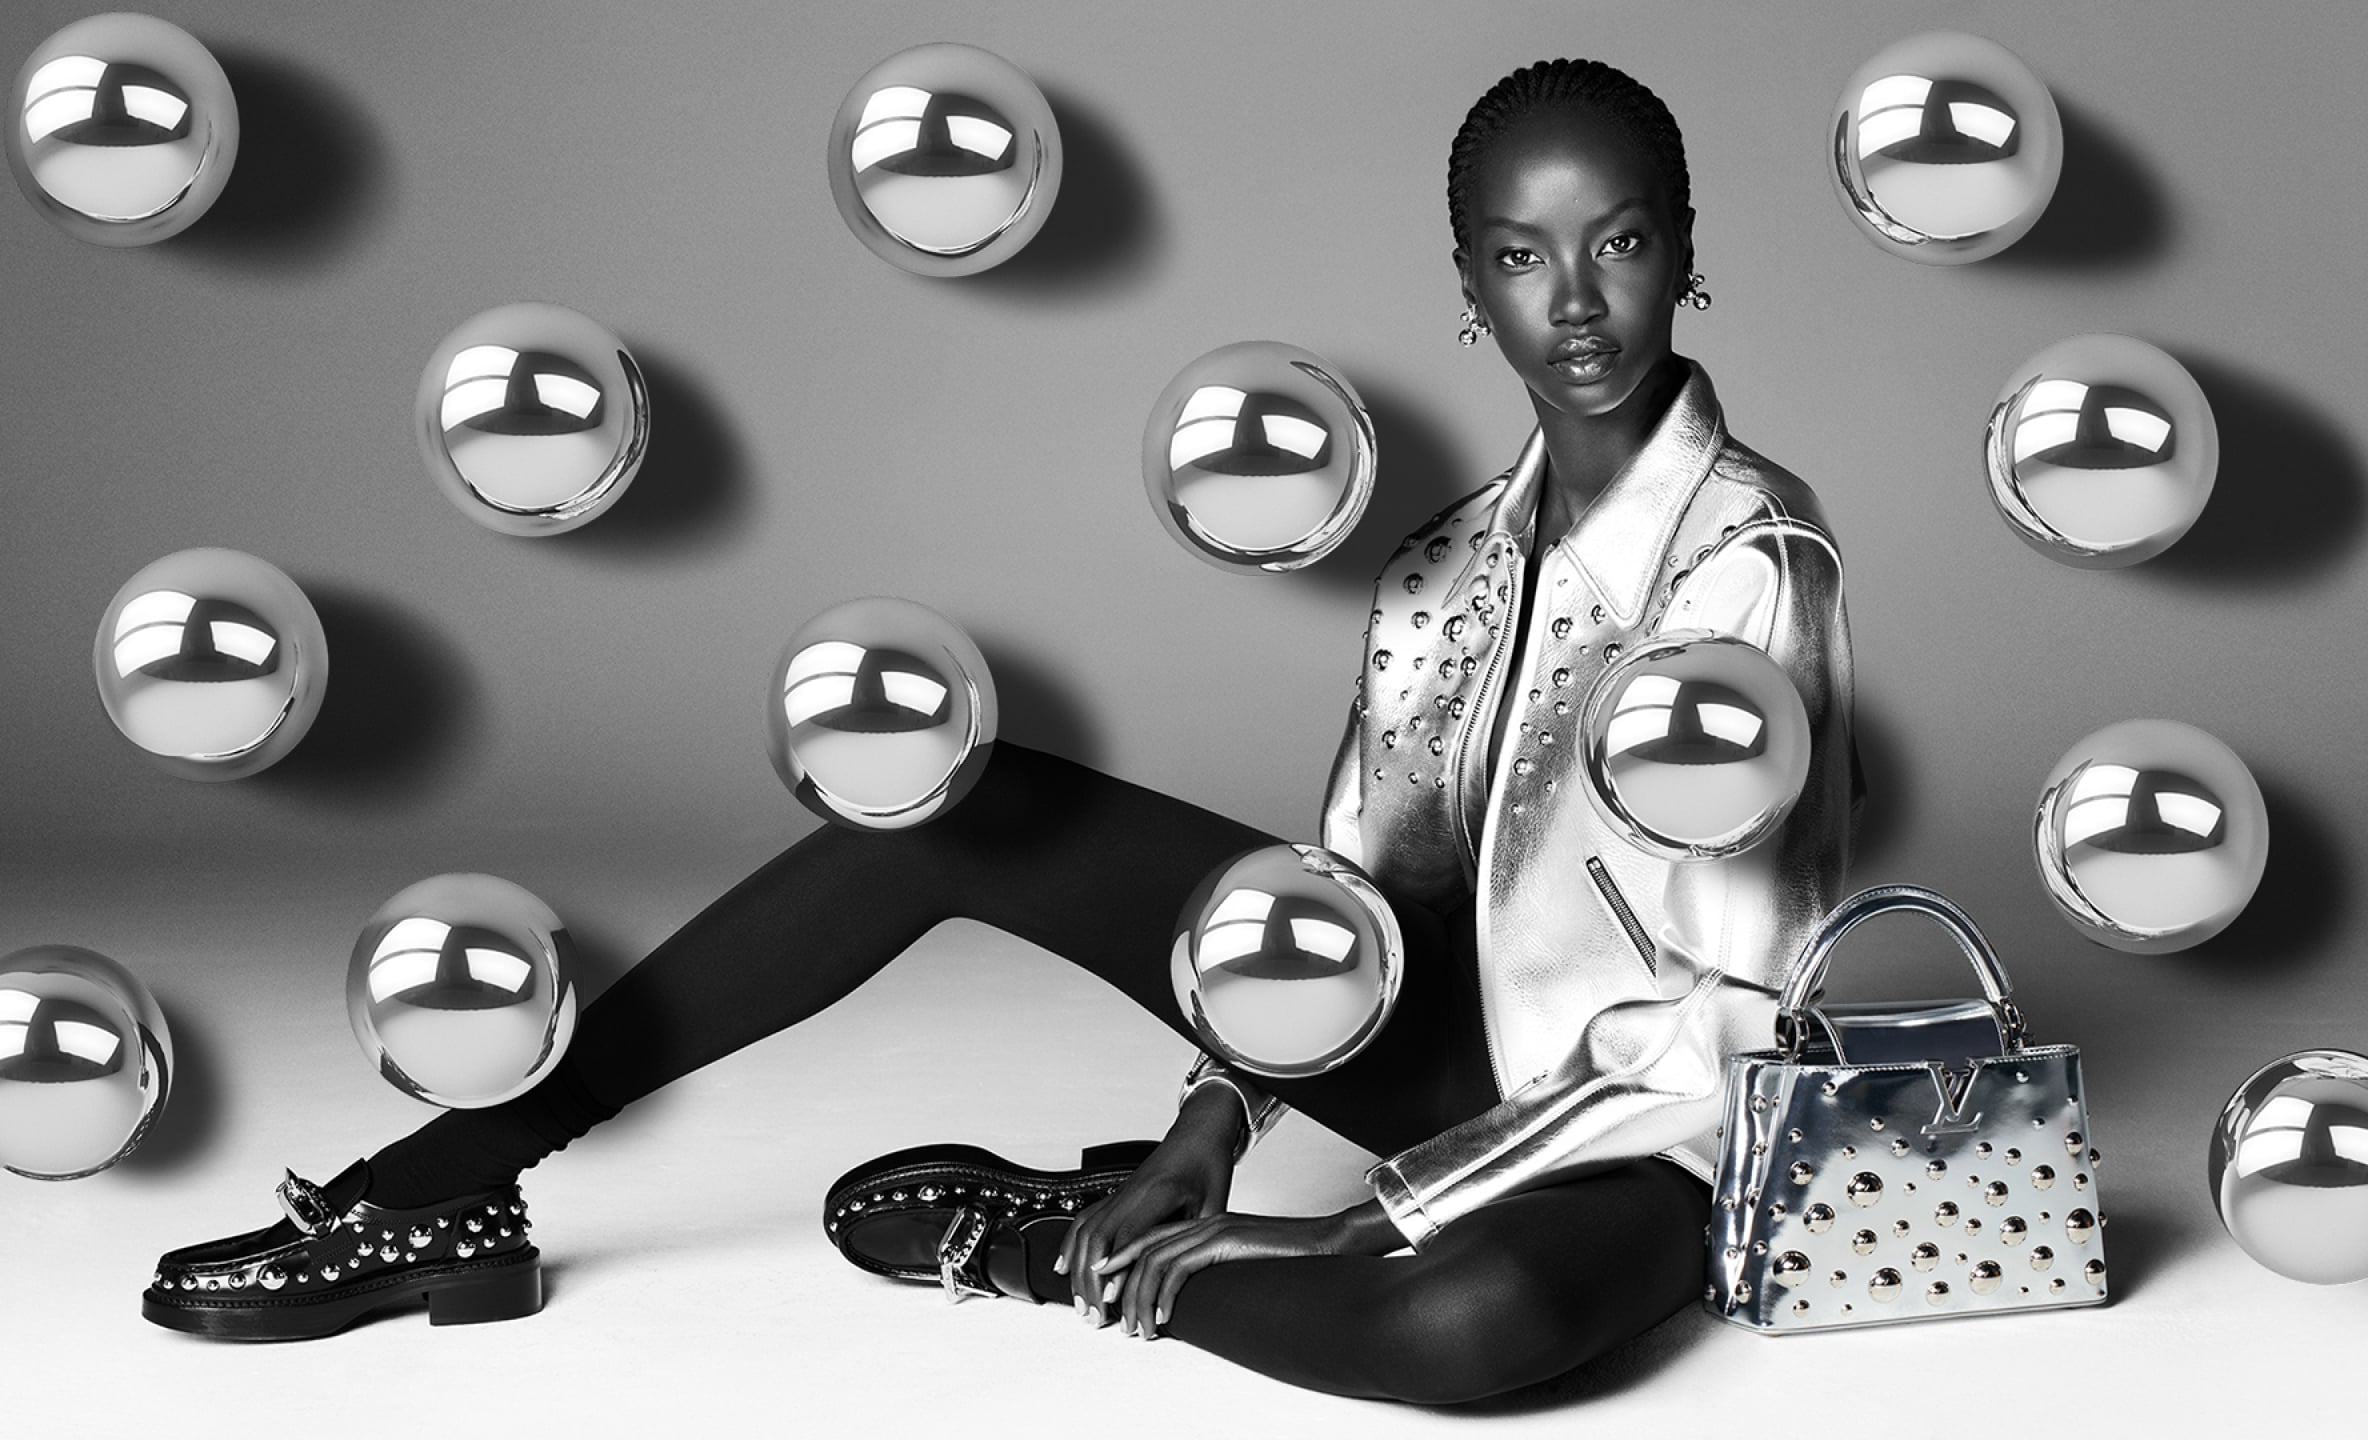 Louis Vuitton mirrors Yayoi Kusama's Tokyo collaboration with New